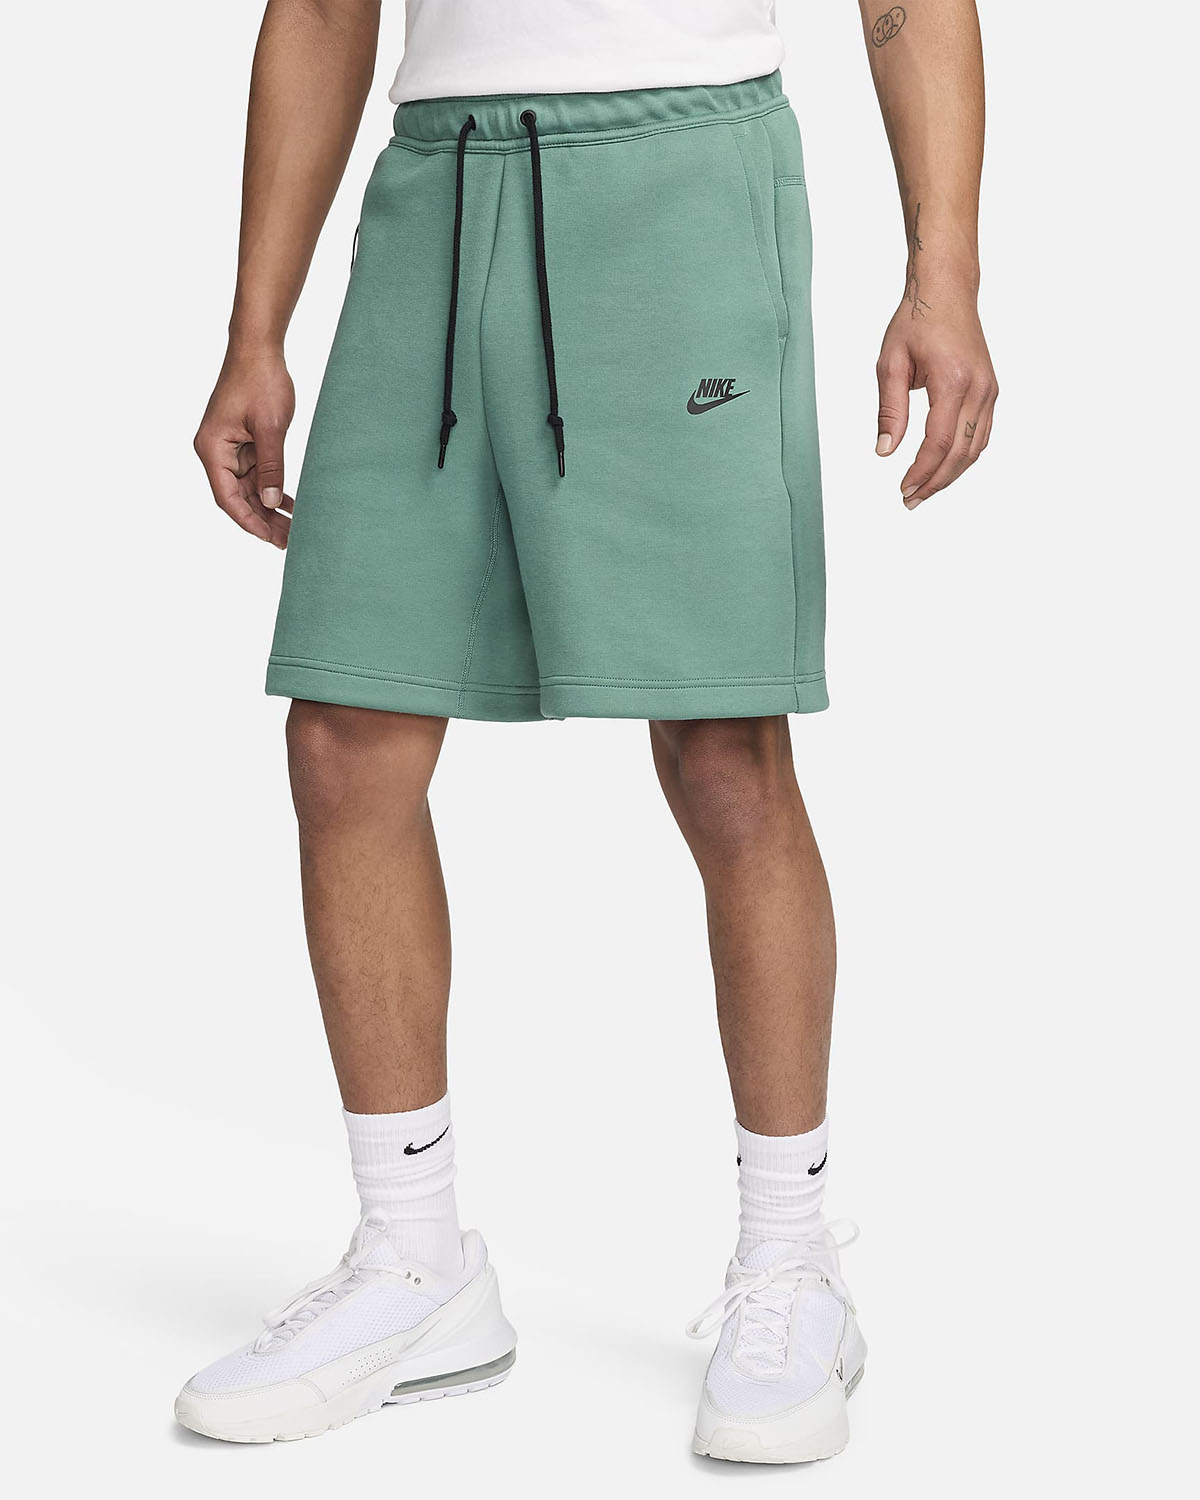 Nike Tech Fleece Shorts Bicoastal